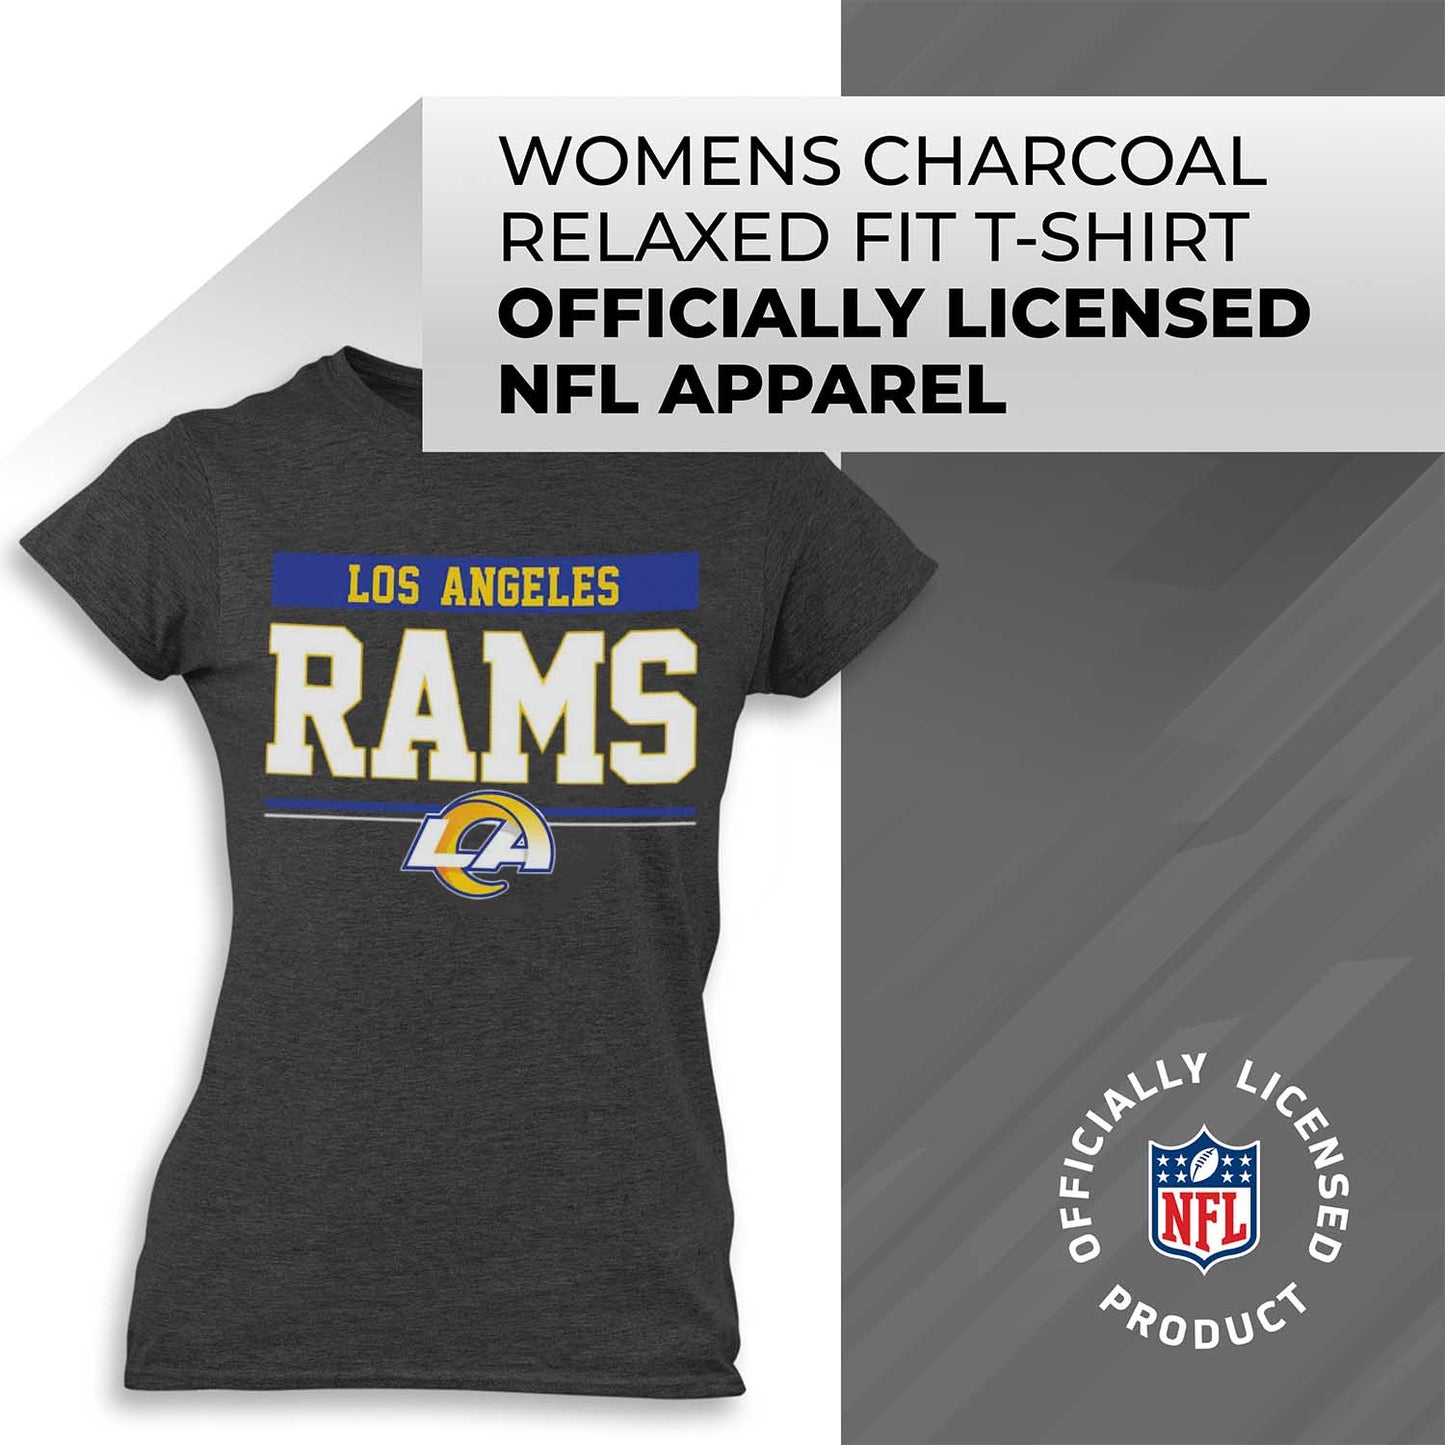 Los Angeles Rams NFL Women's Team Block Charcoal Tagless T-Shirt - Charcoal